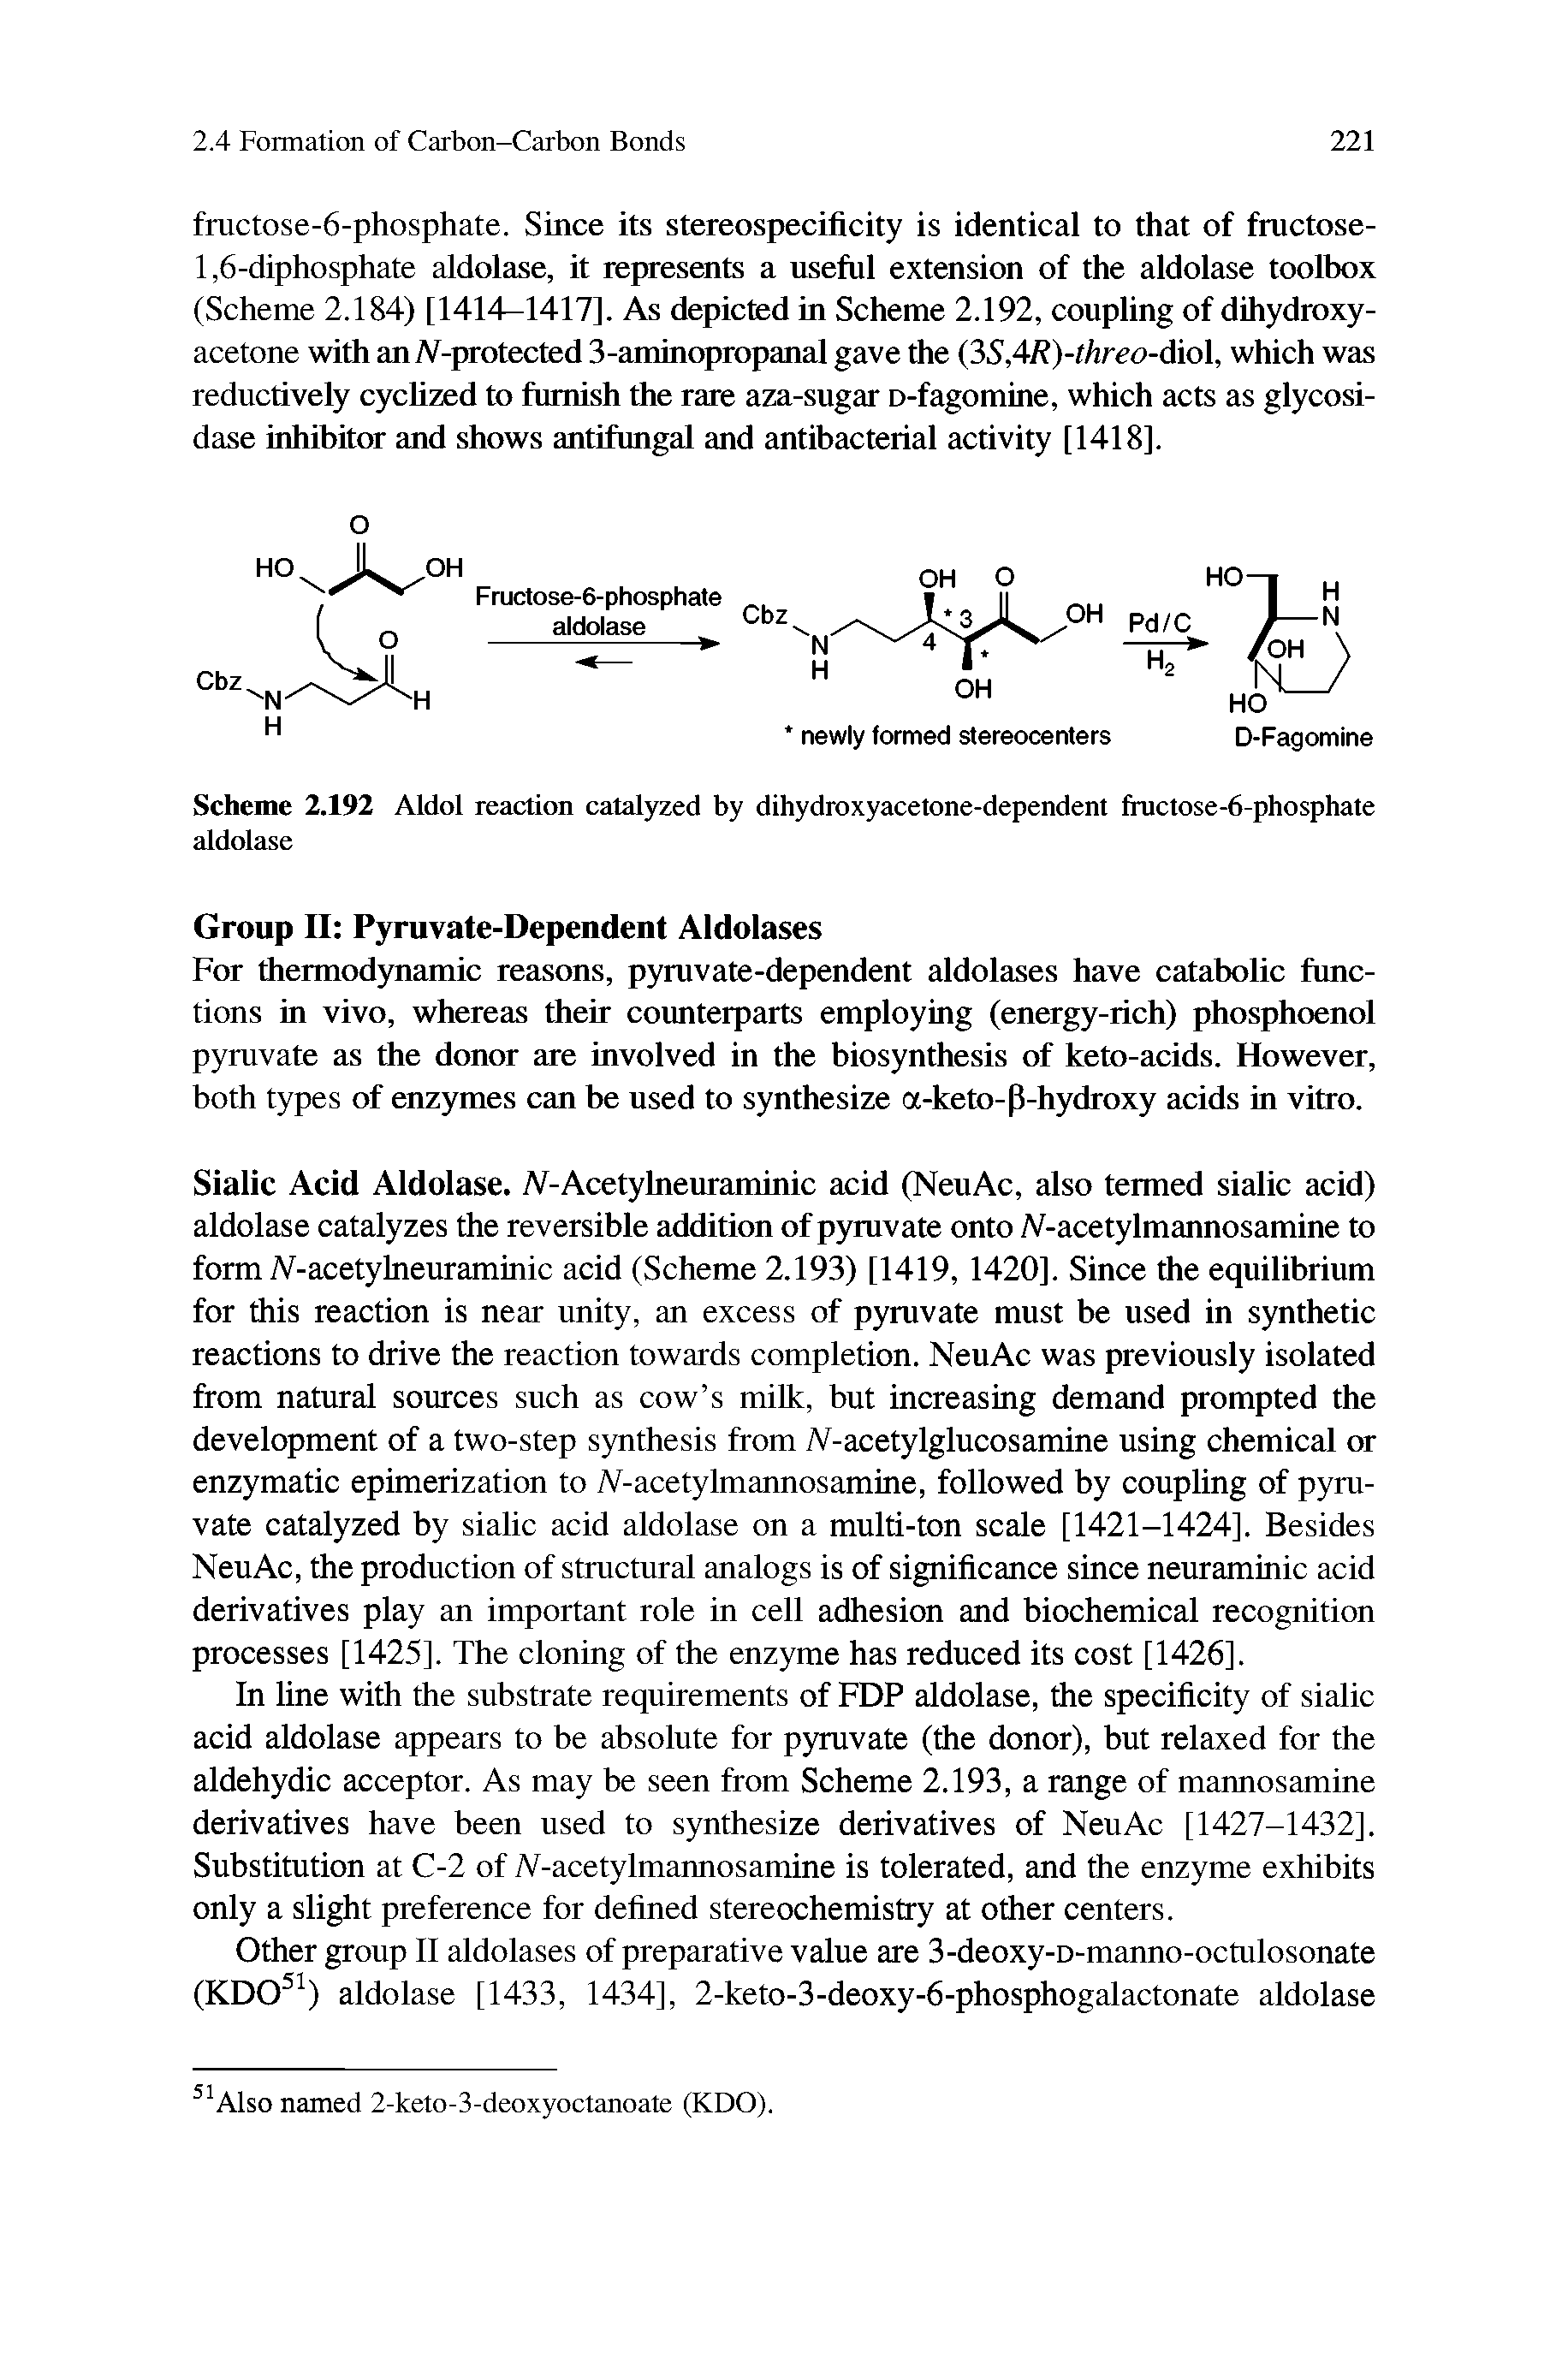 Scheme 2.192 Aldol reaction catalyzed by dihydroxyacetone-dependent fhictose-6-phosphate aldolase...